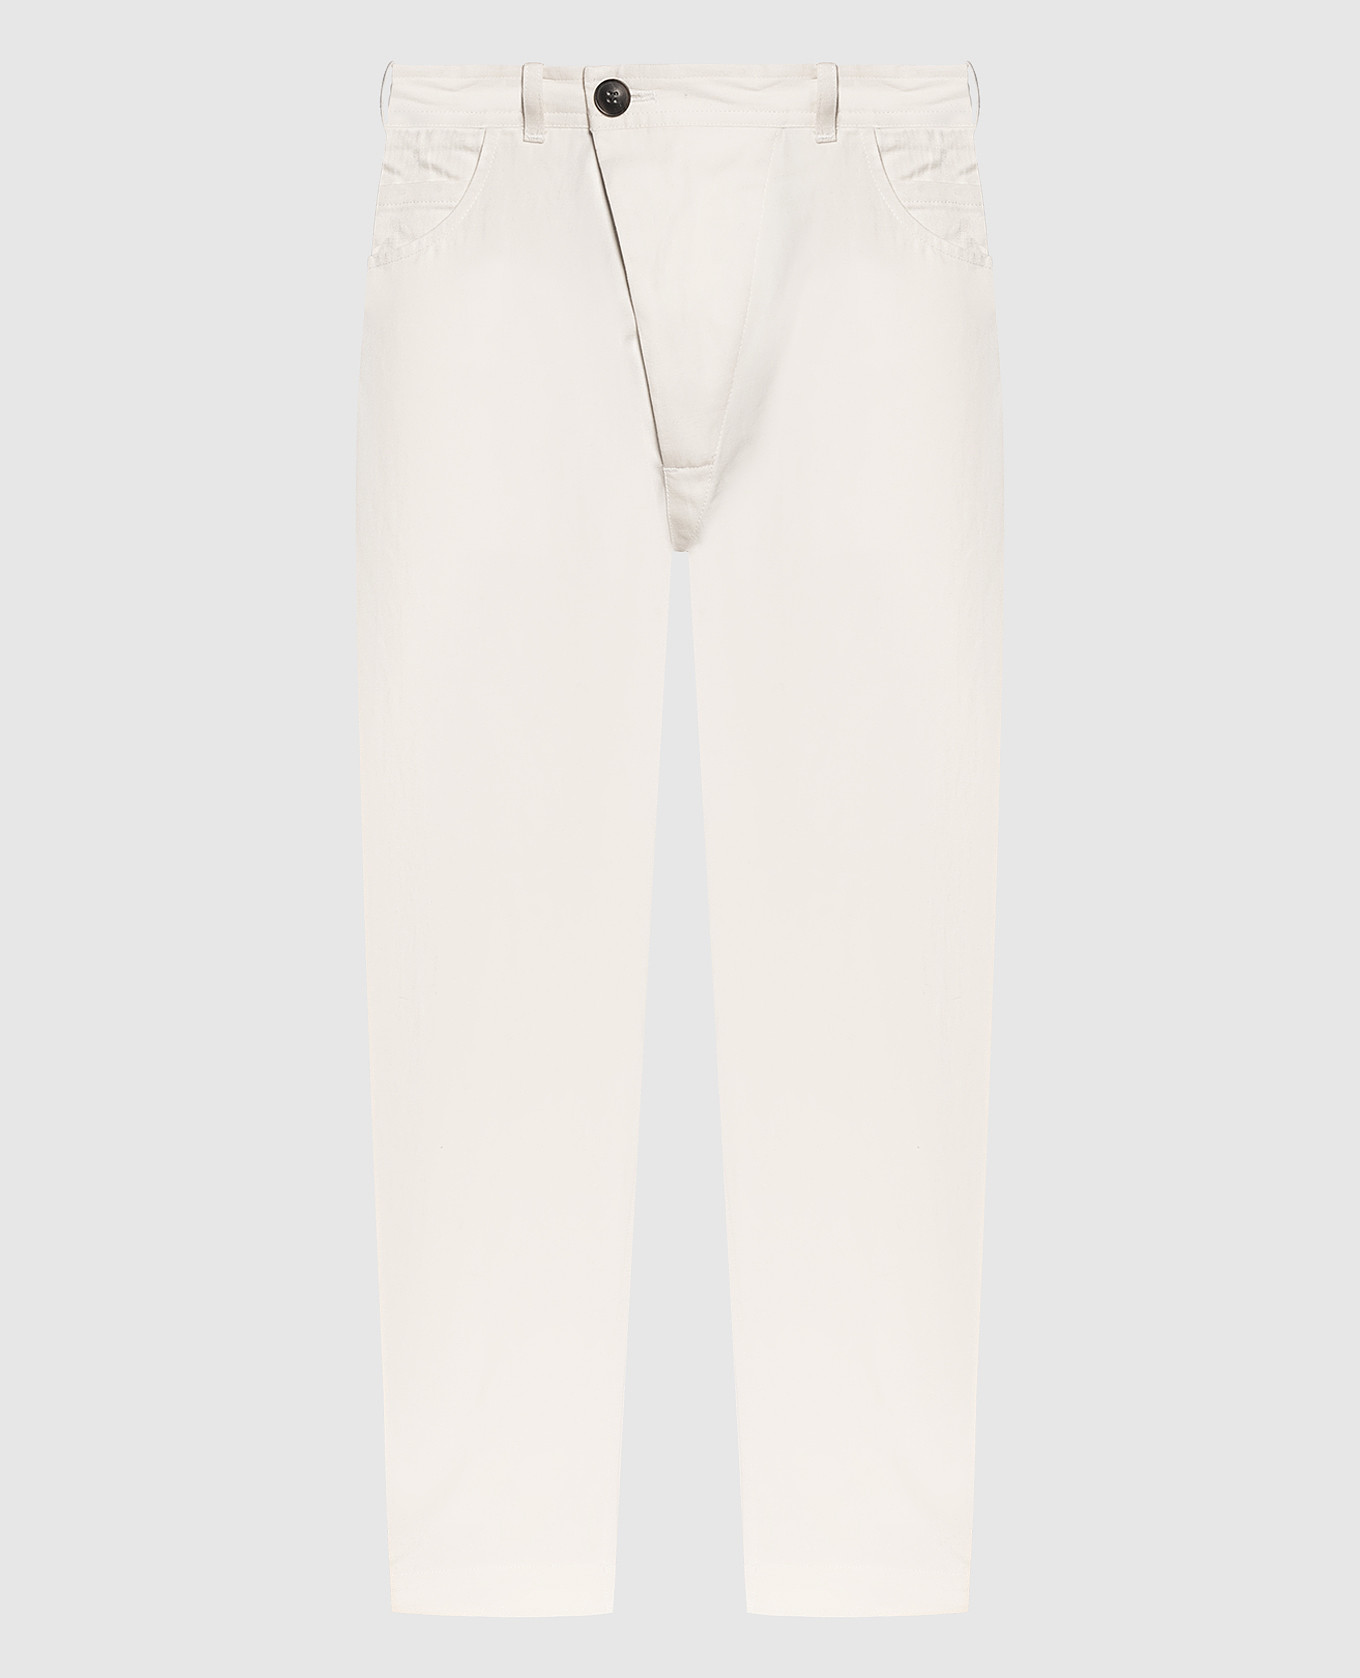 White pants #70 with hemp